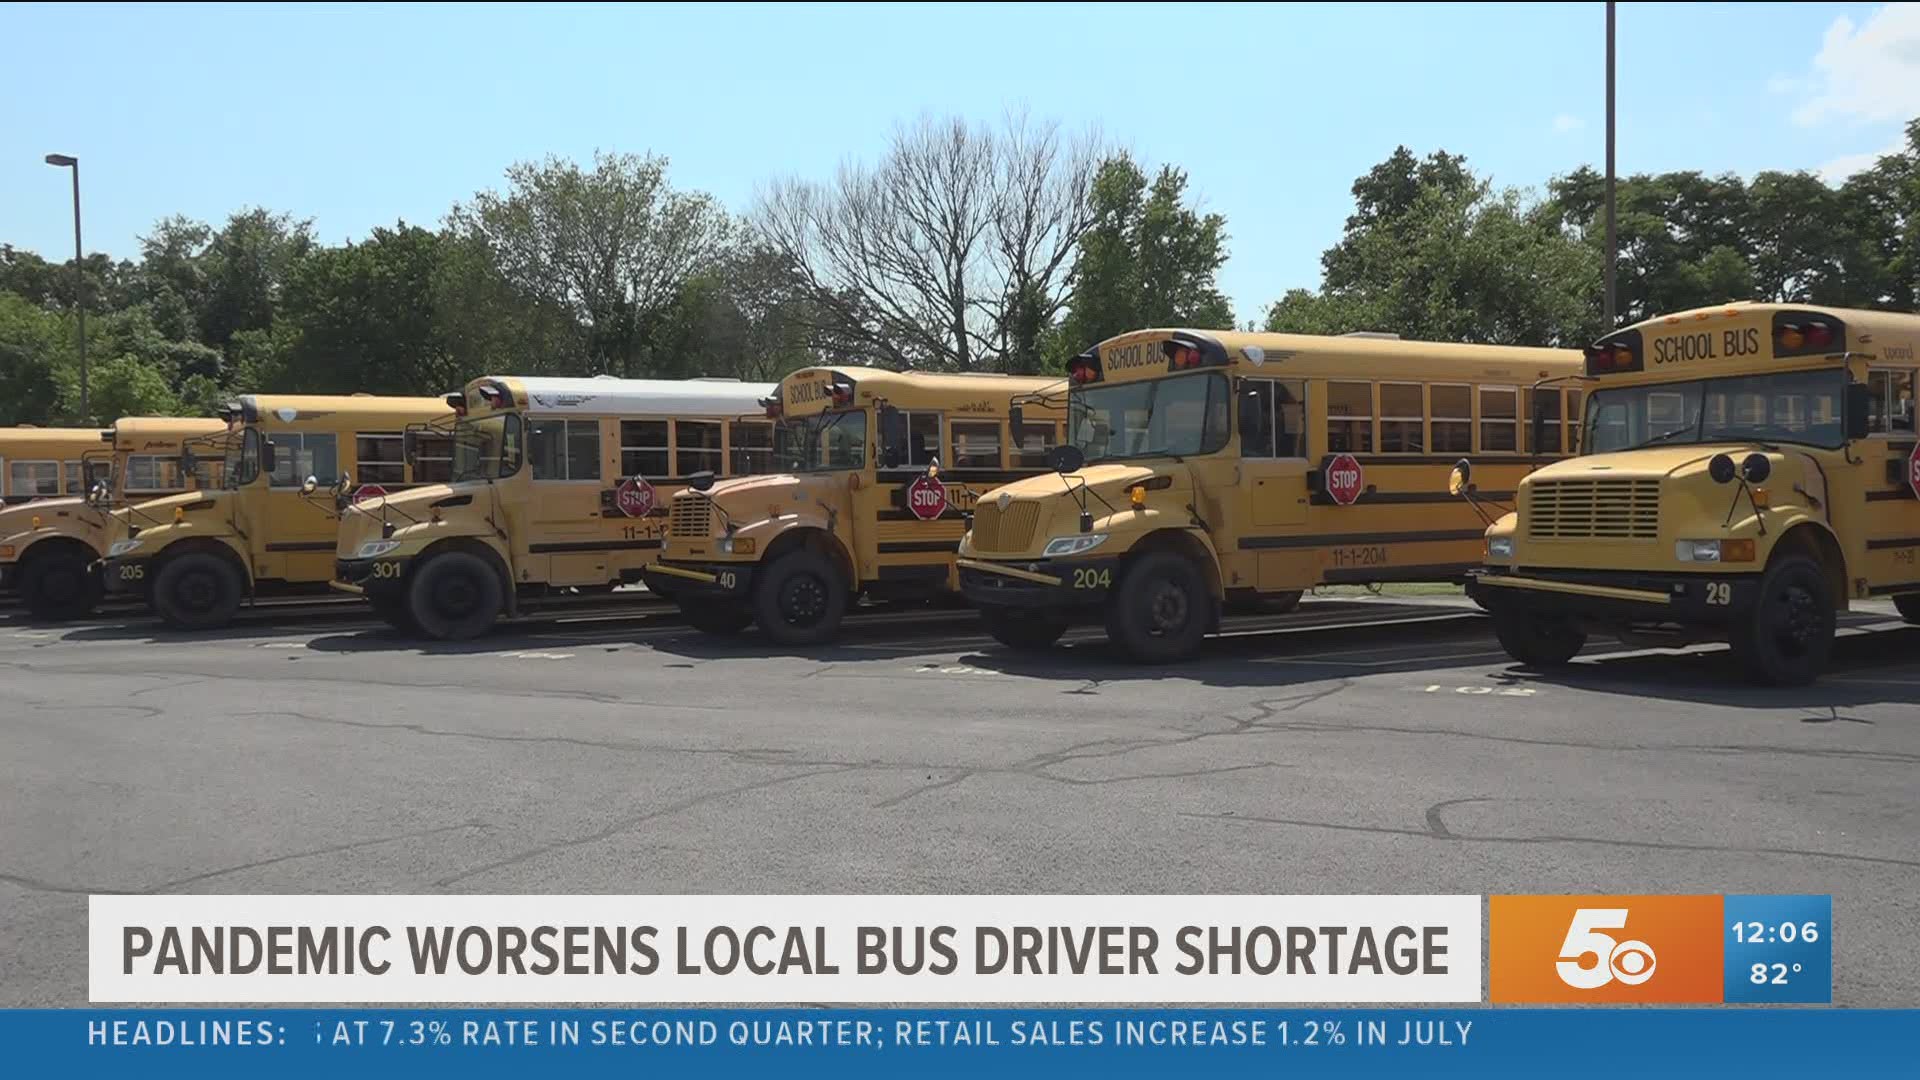 Pandemic worsens local bus driver shortage.